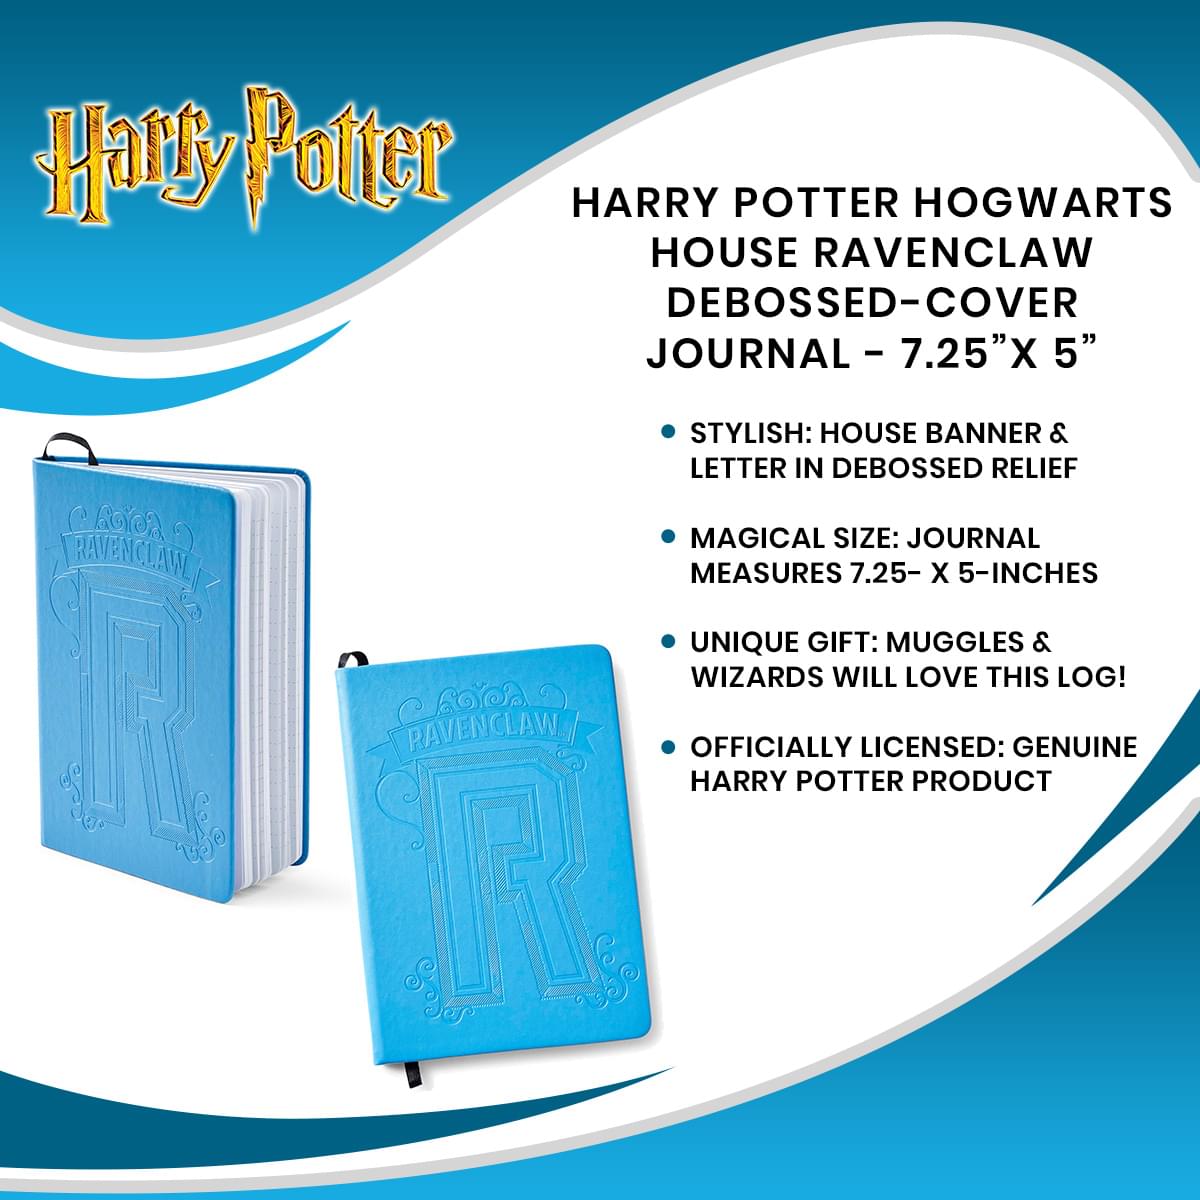 Harry Potter HogwartsHouse Ravenclaw Debossed-Cover Journal - 7.25”x 5”